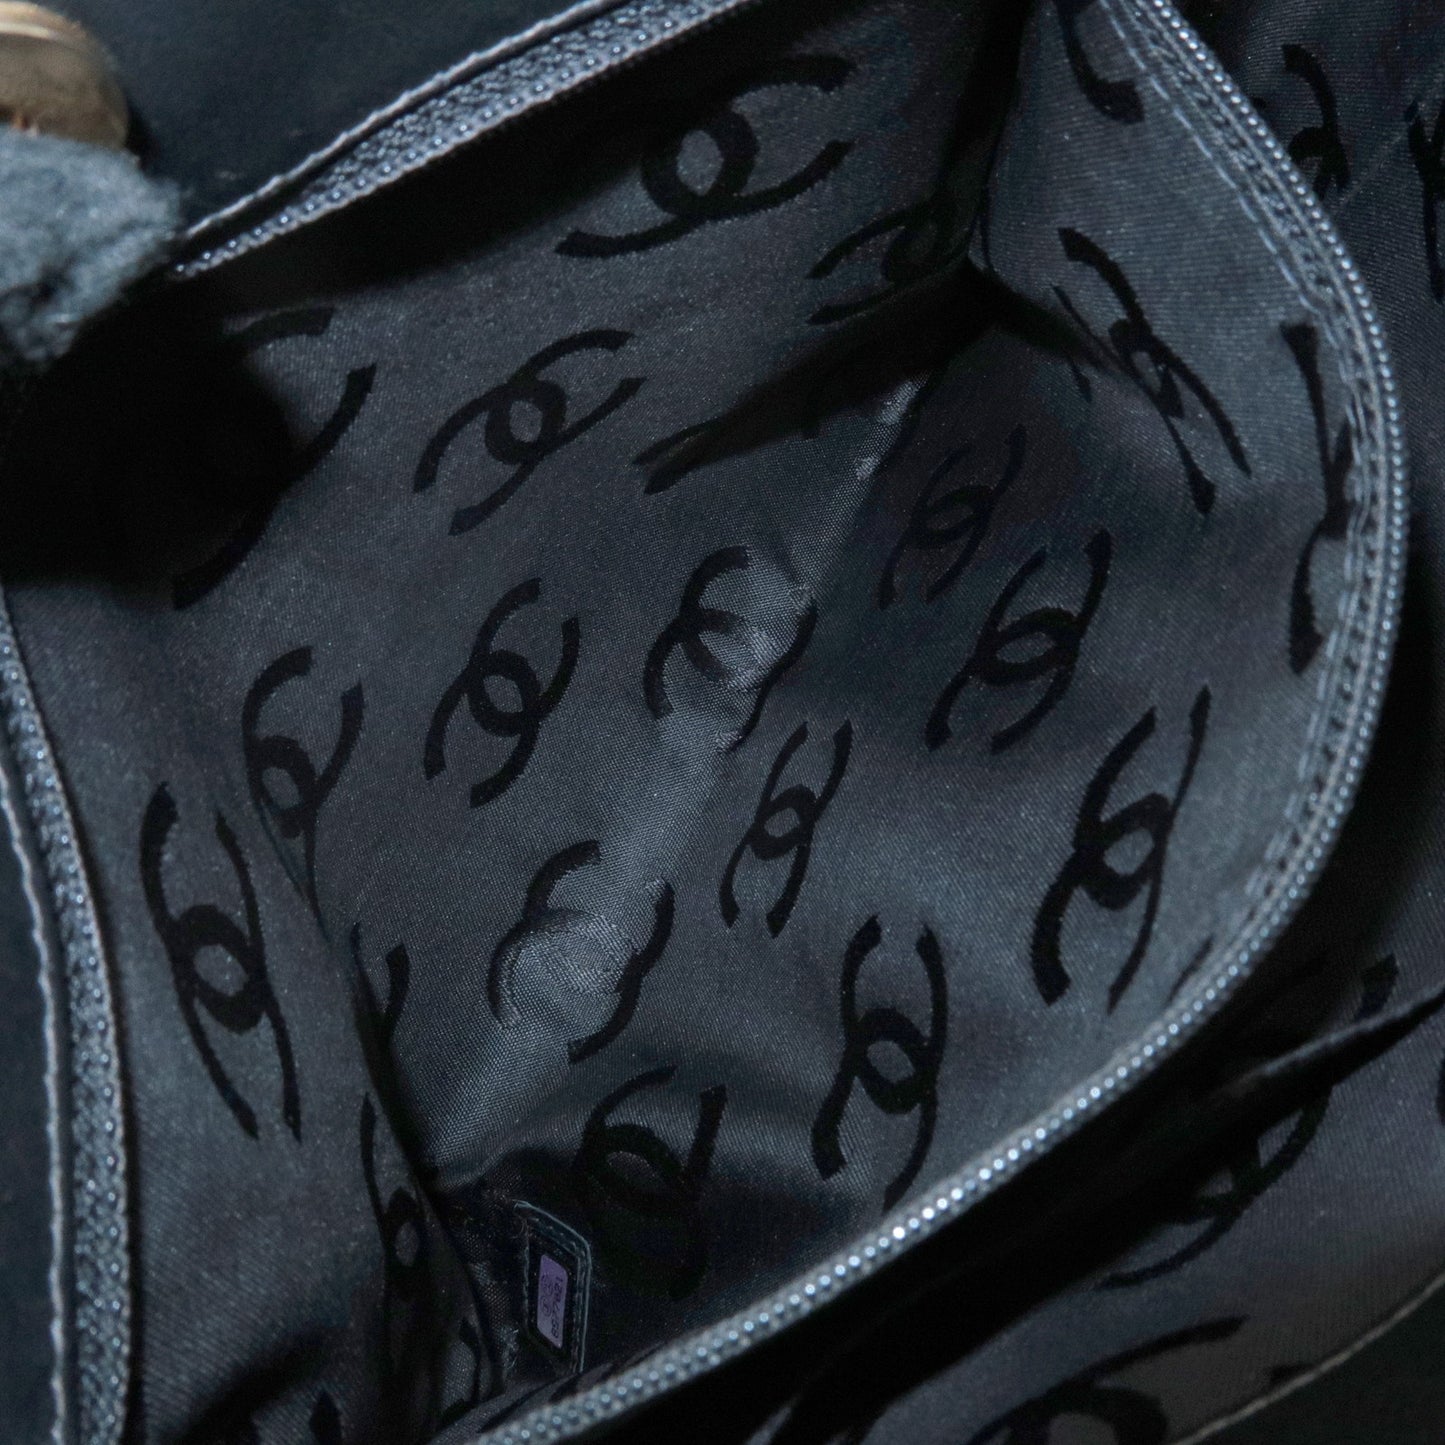 CHANEL Wild Stitch Leather Tote Bag Hand Bag Black